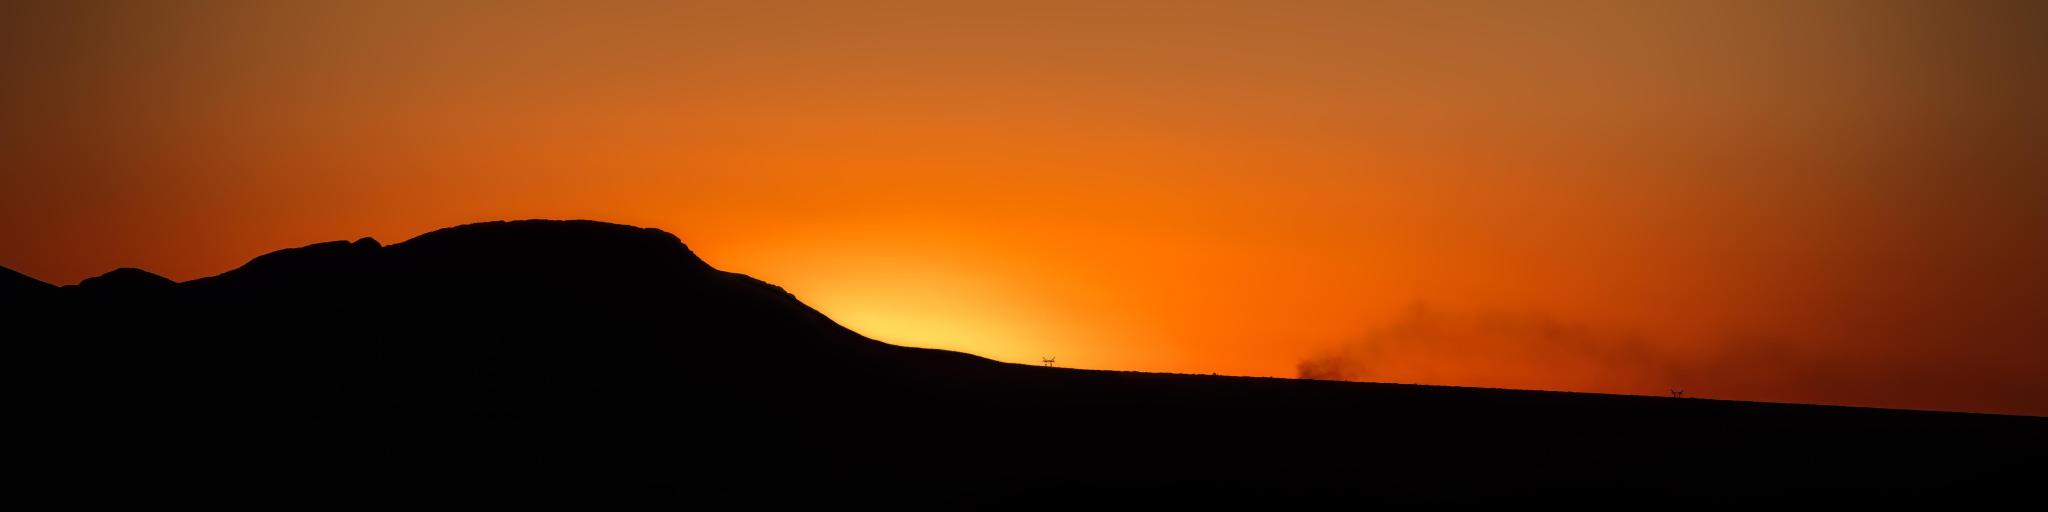 Orange glowing sunset over the desert near El Paso in Texas